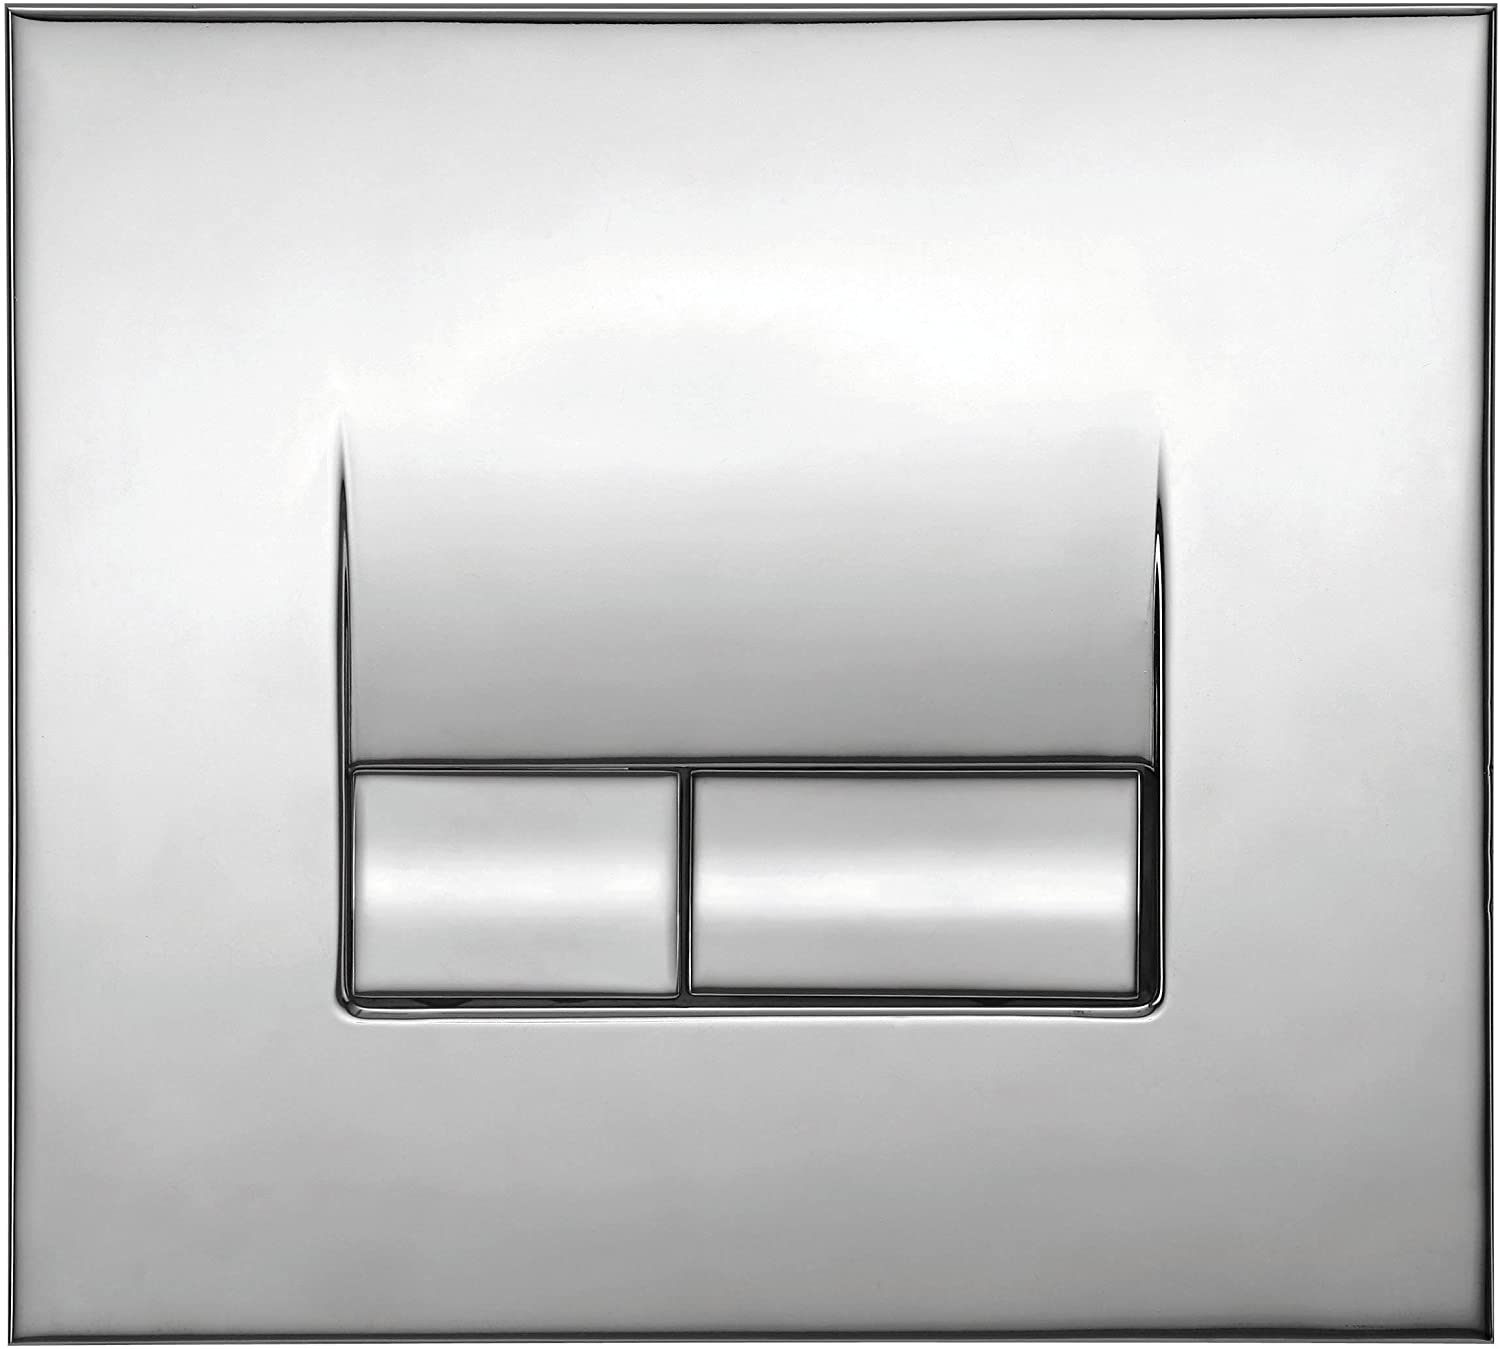 Gasket 31191210í«ÌÎ_Shiny Chrome Control Plate